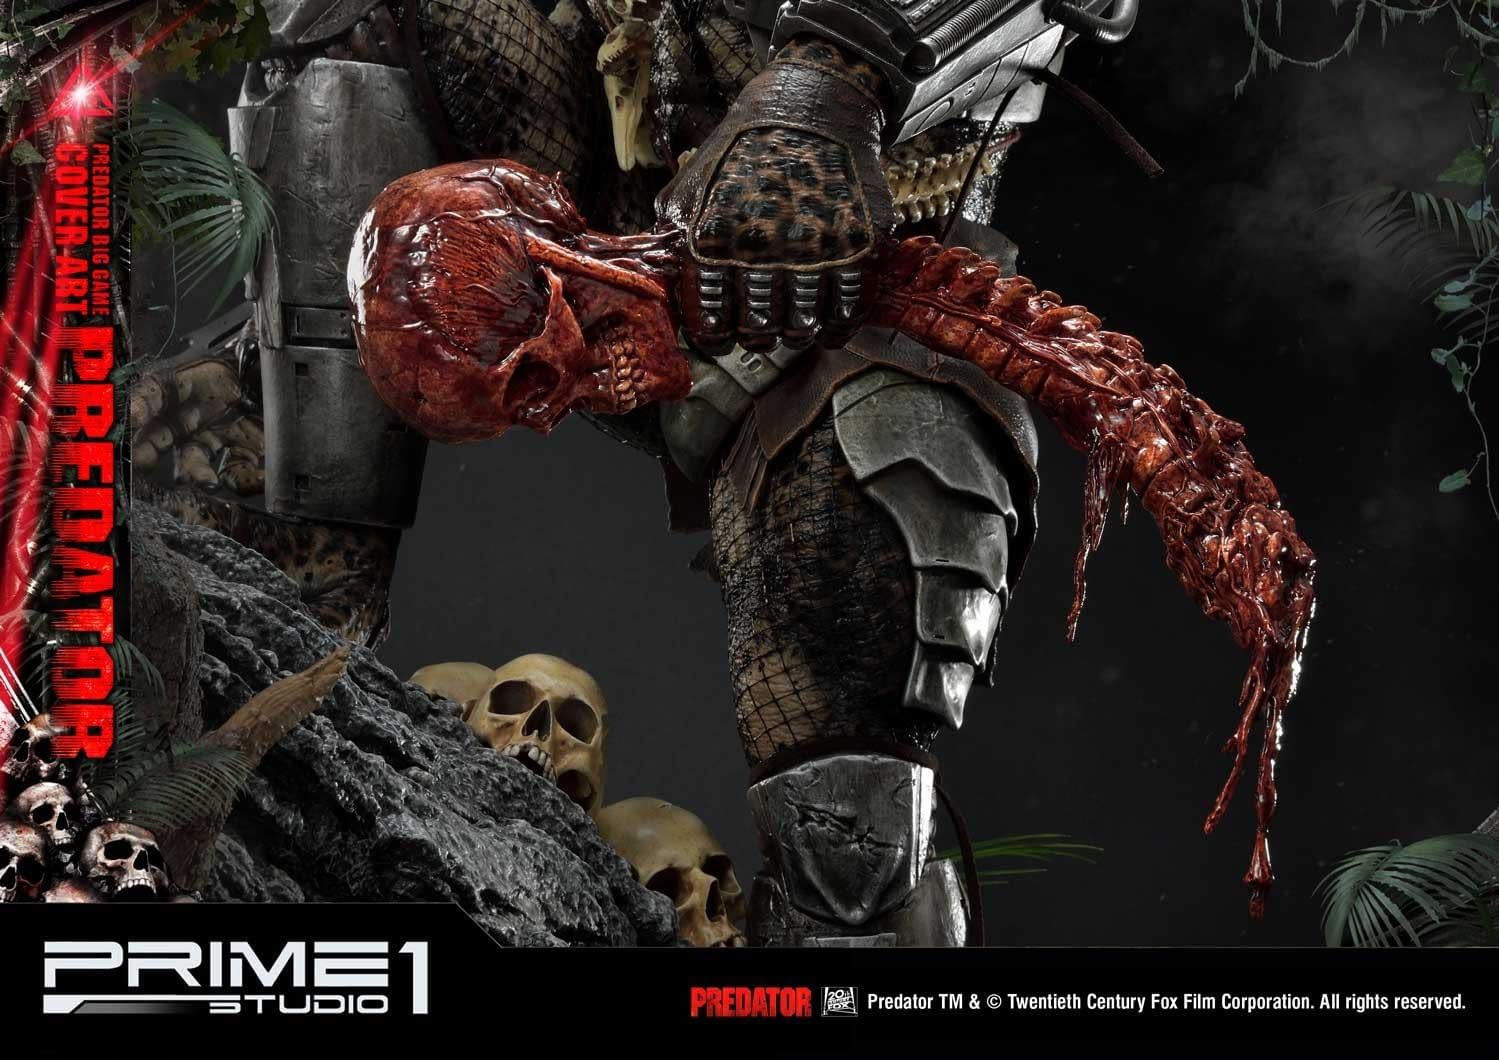 Predator Begins the Hunt with New Prime 1 Studios Statue 